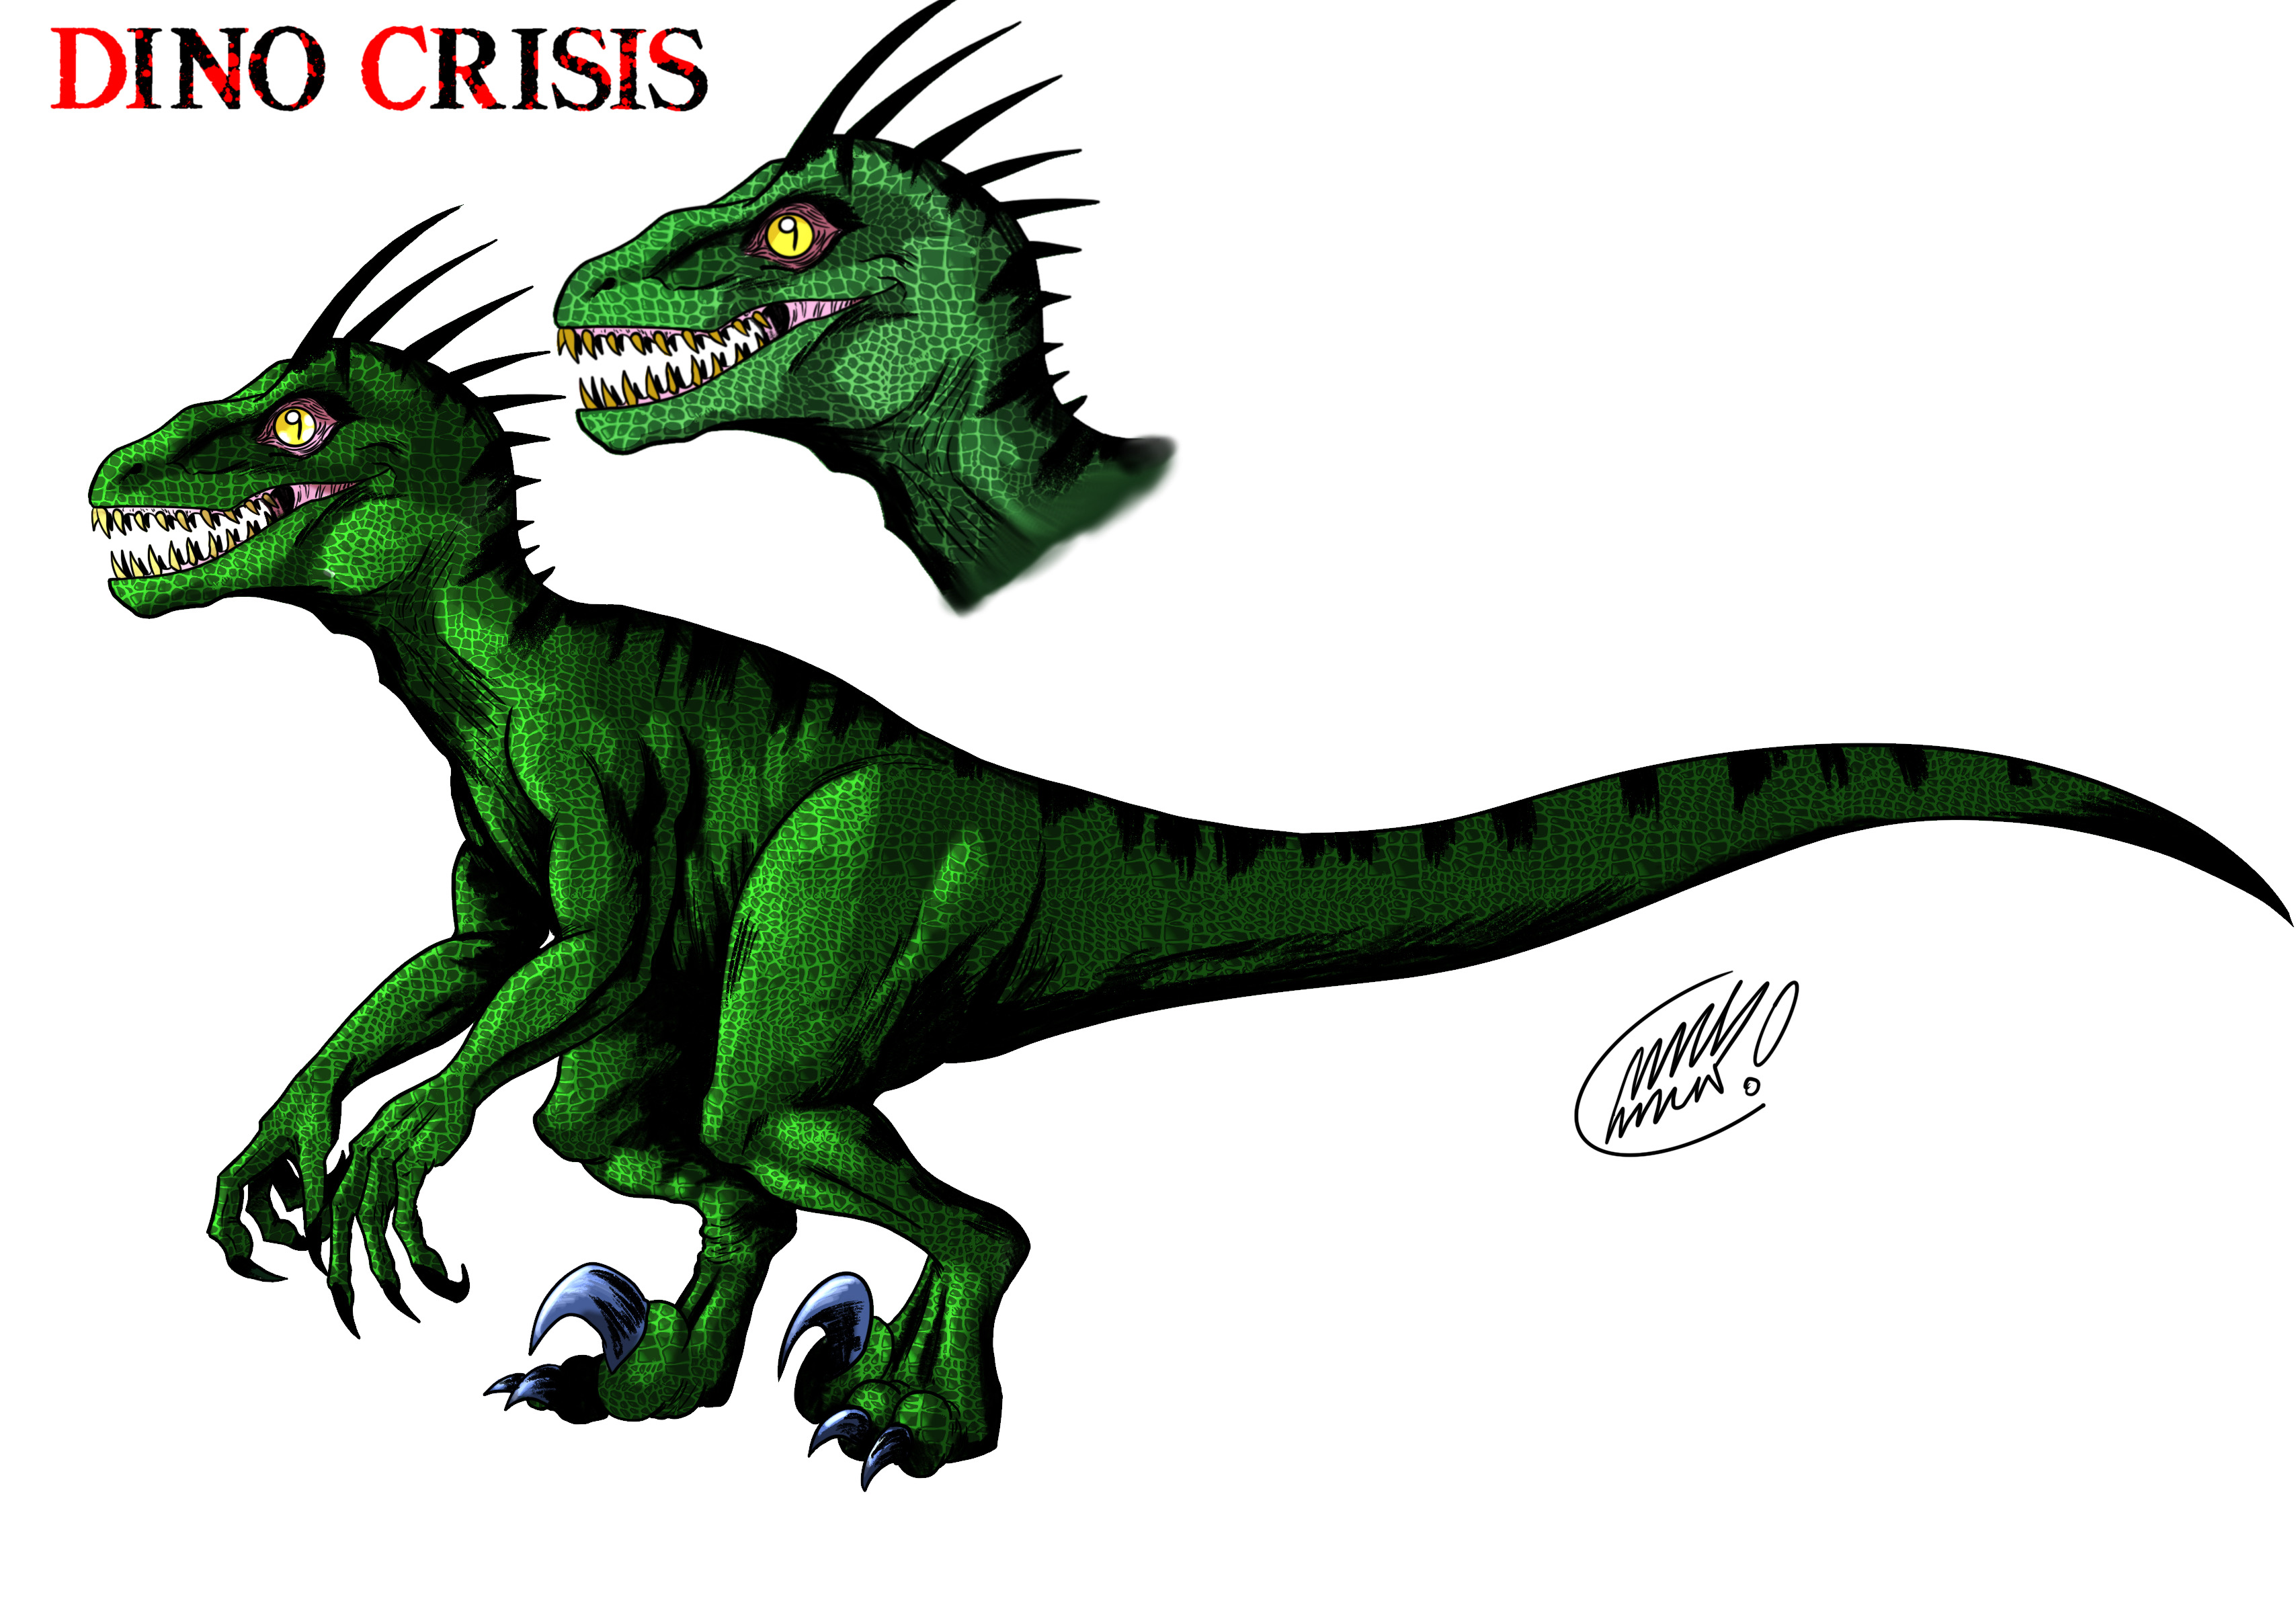 Dino Crisis - Movie Adaptation by diamonddead-Art on DeviantArt